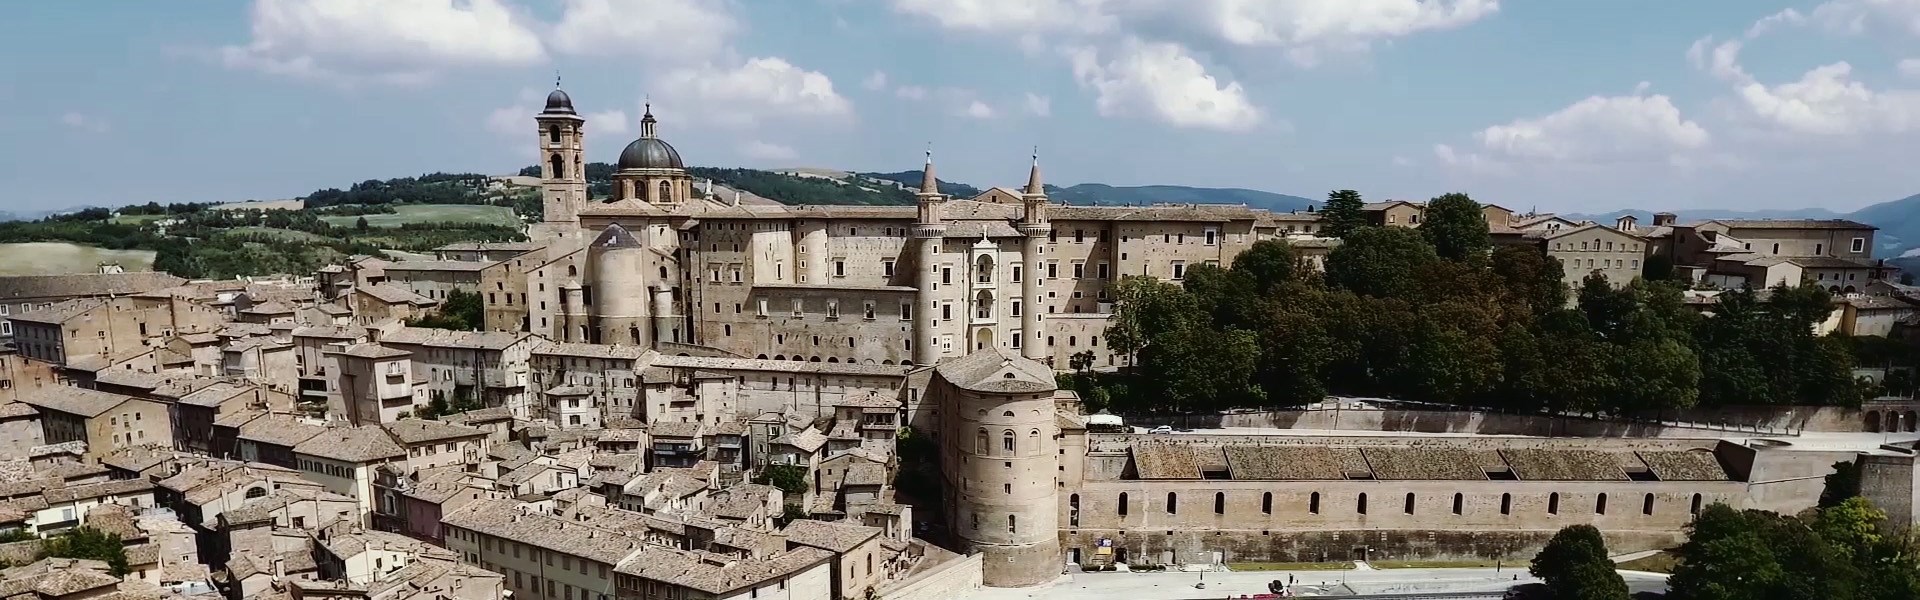 Urbino - paesaggio